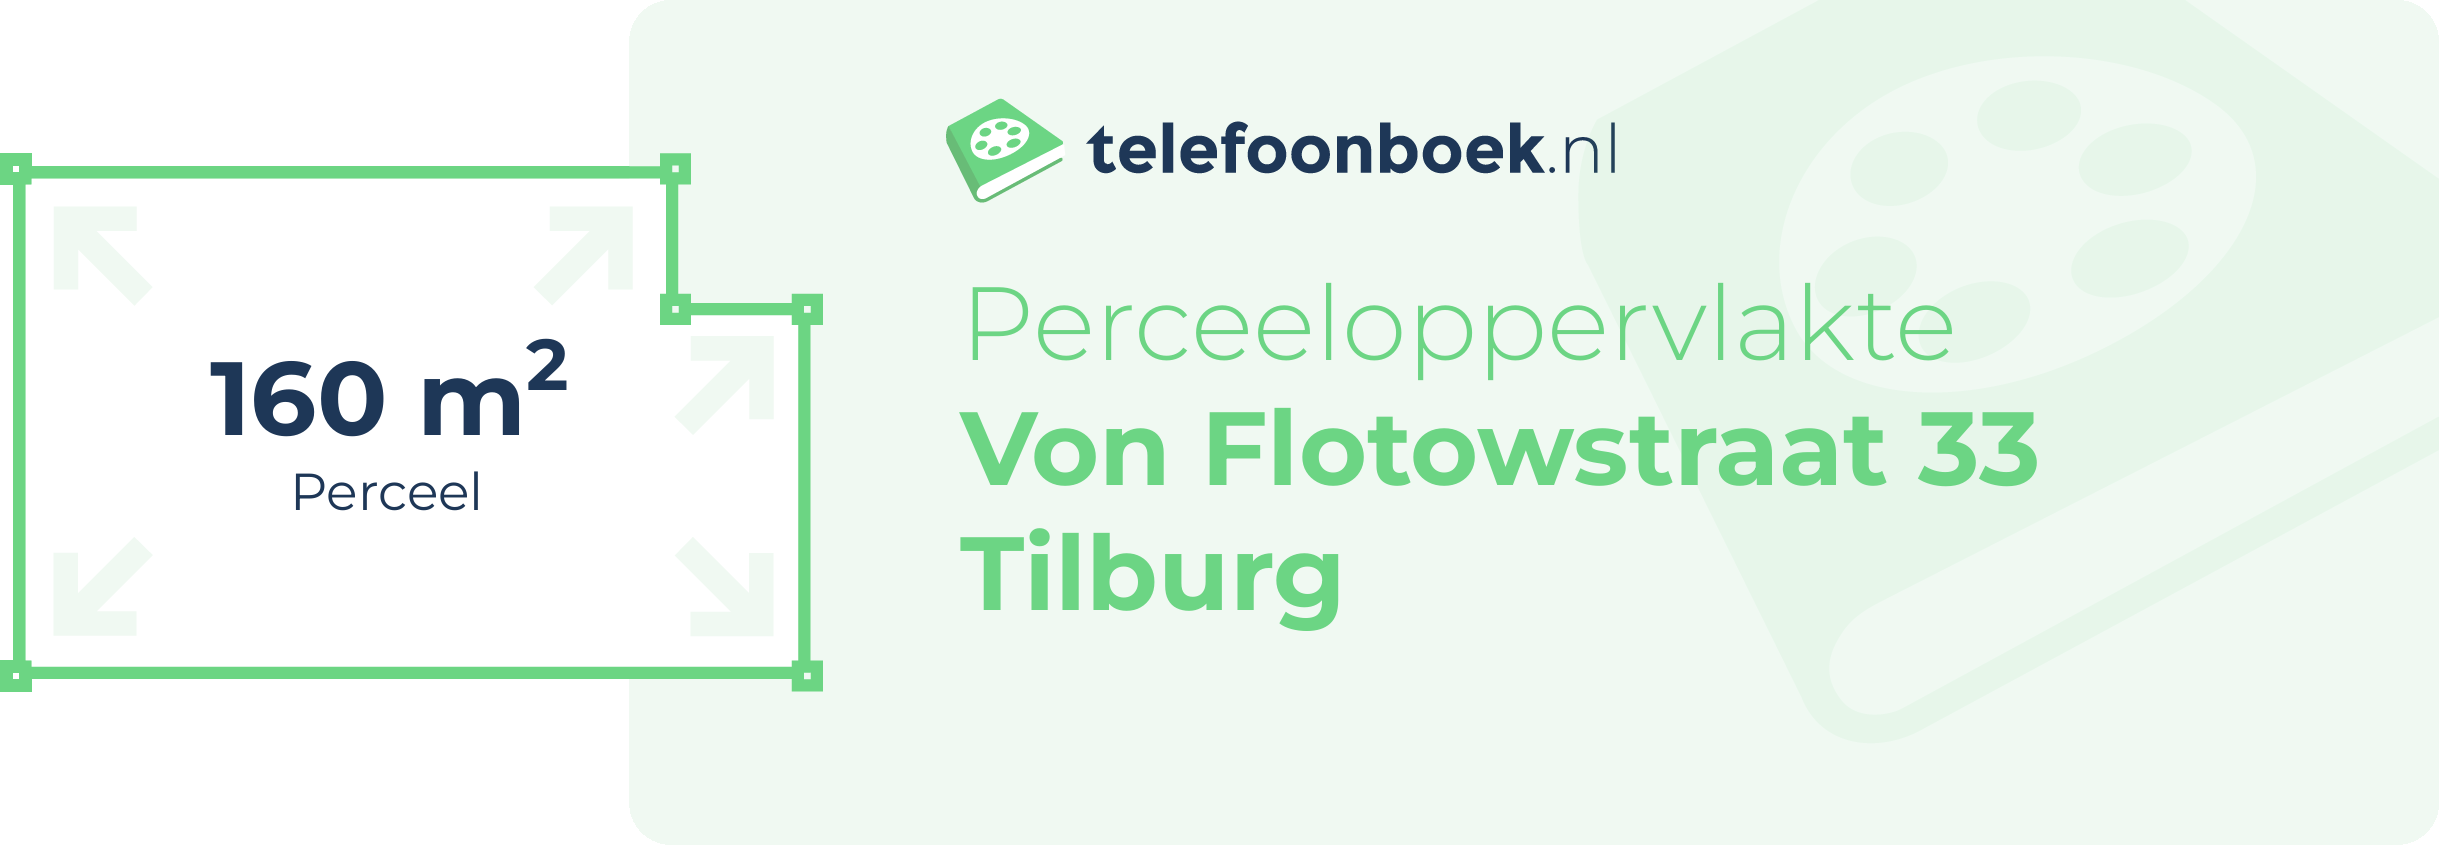 Perceeloppervlakte Von Flotowstraat 33 Tilburg